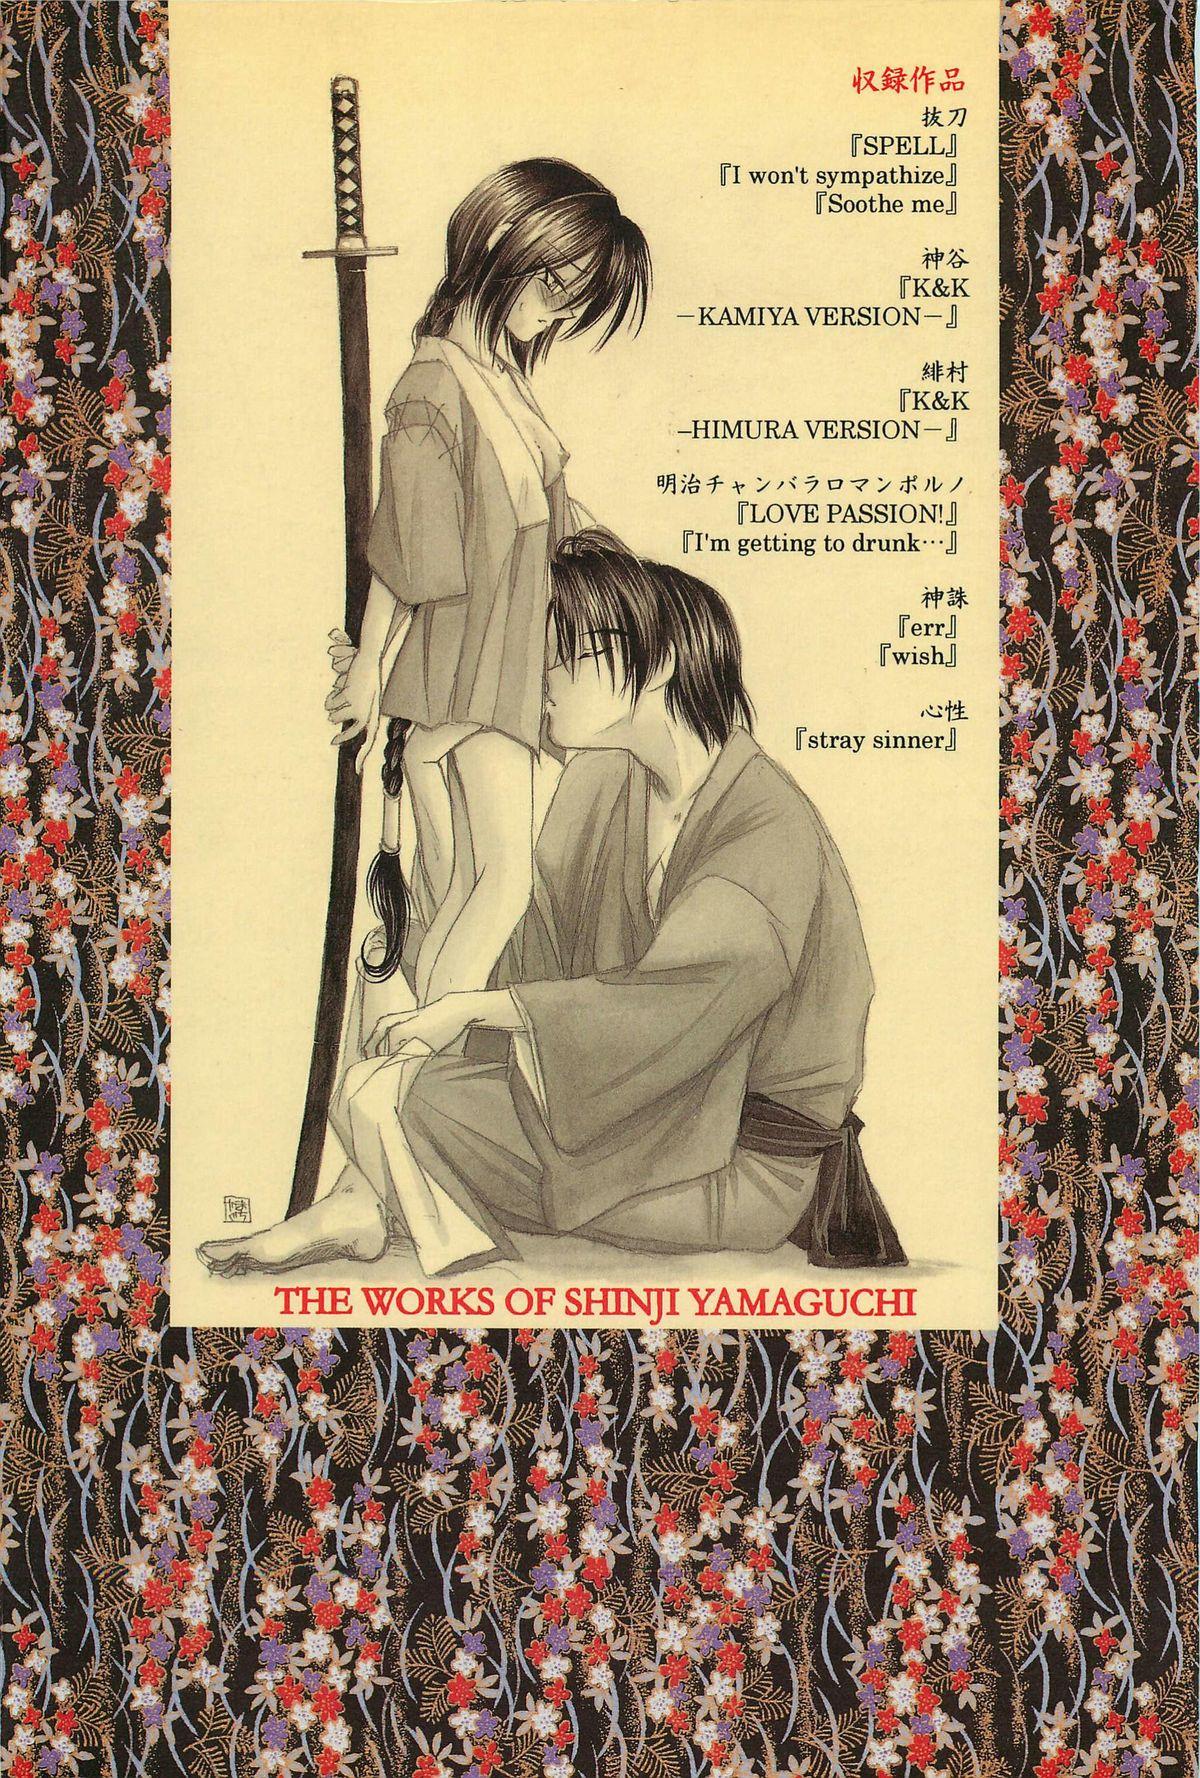 Village TABOO II THE WORKS OF SHINJI YAMAGUCHI - Rurouni kenshin Spooning - Page 212